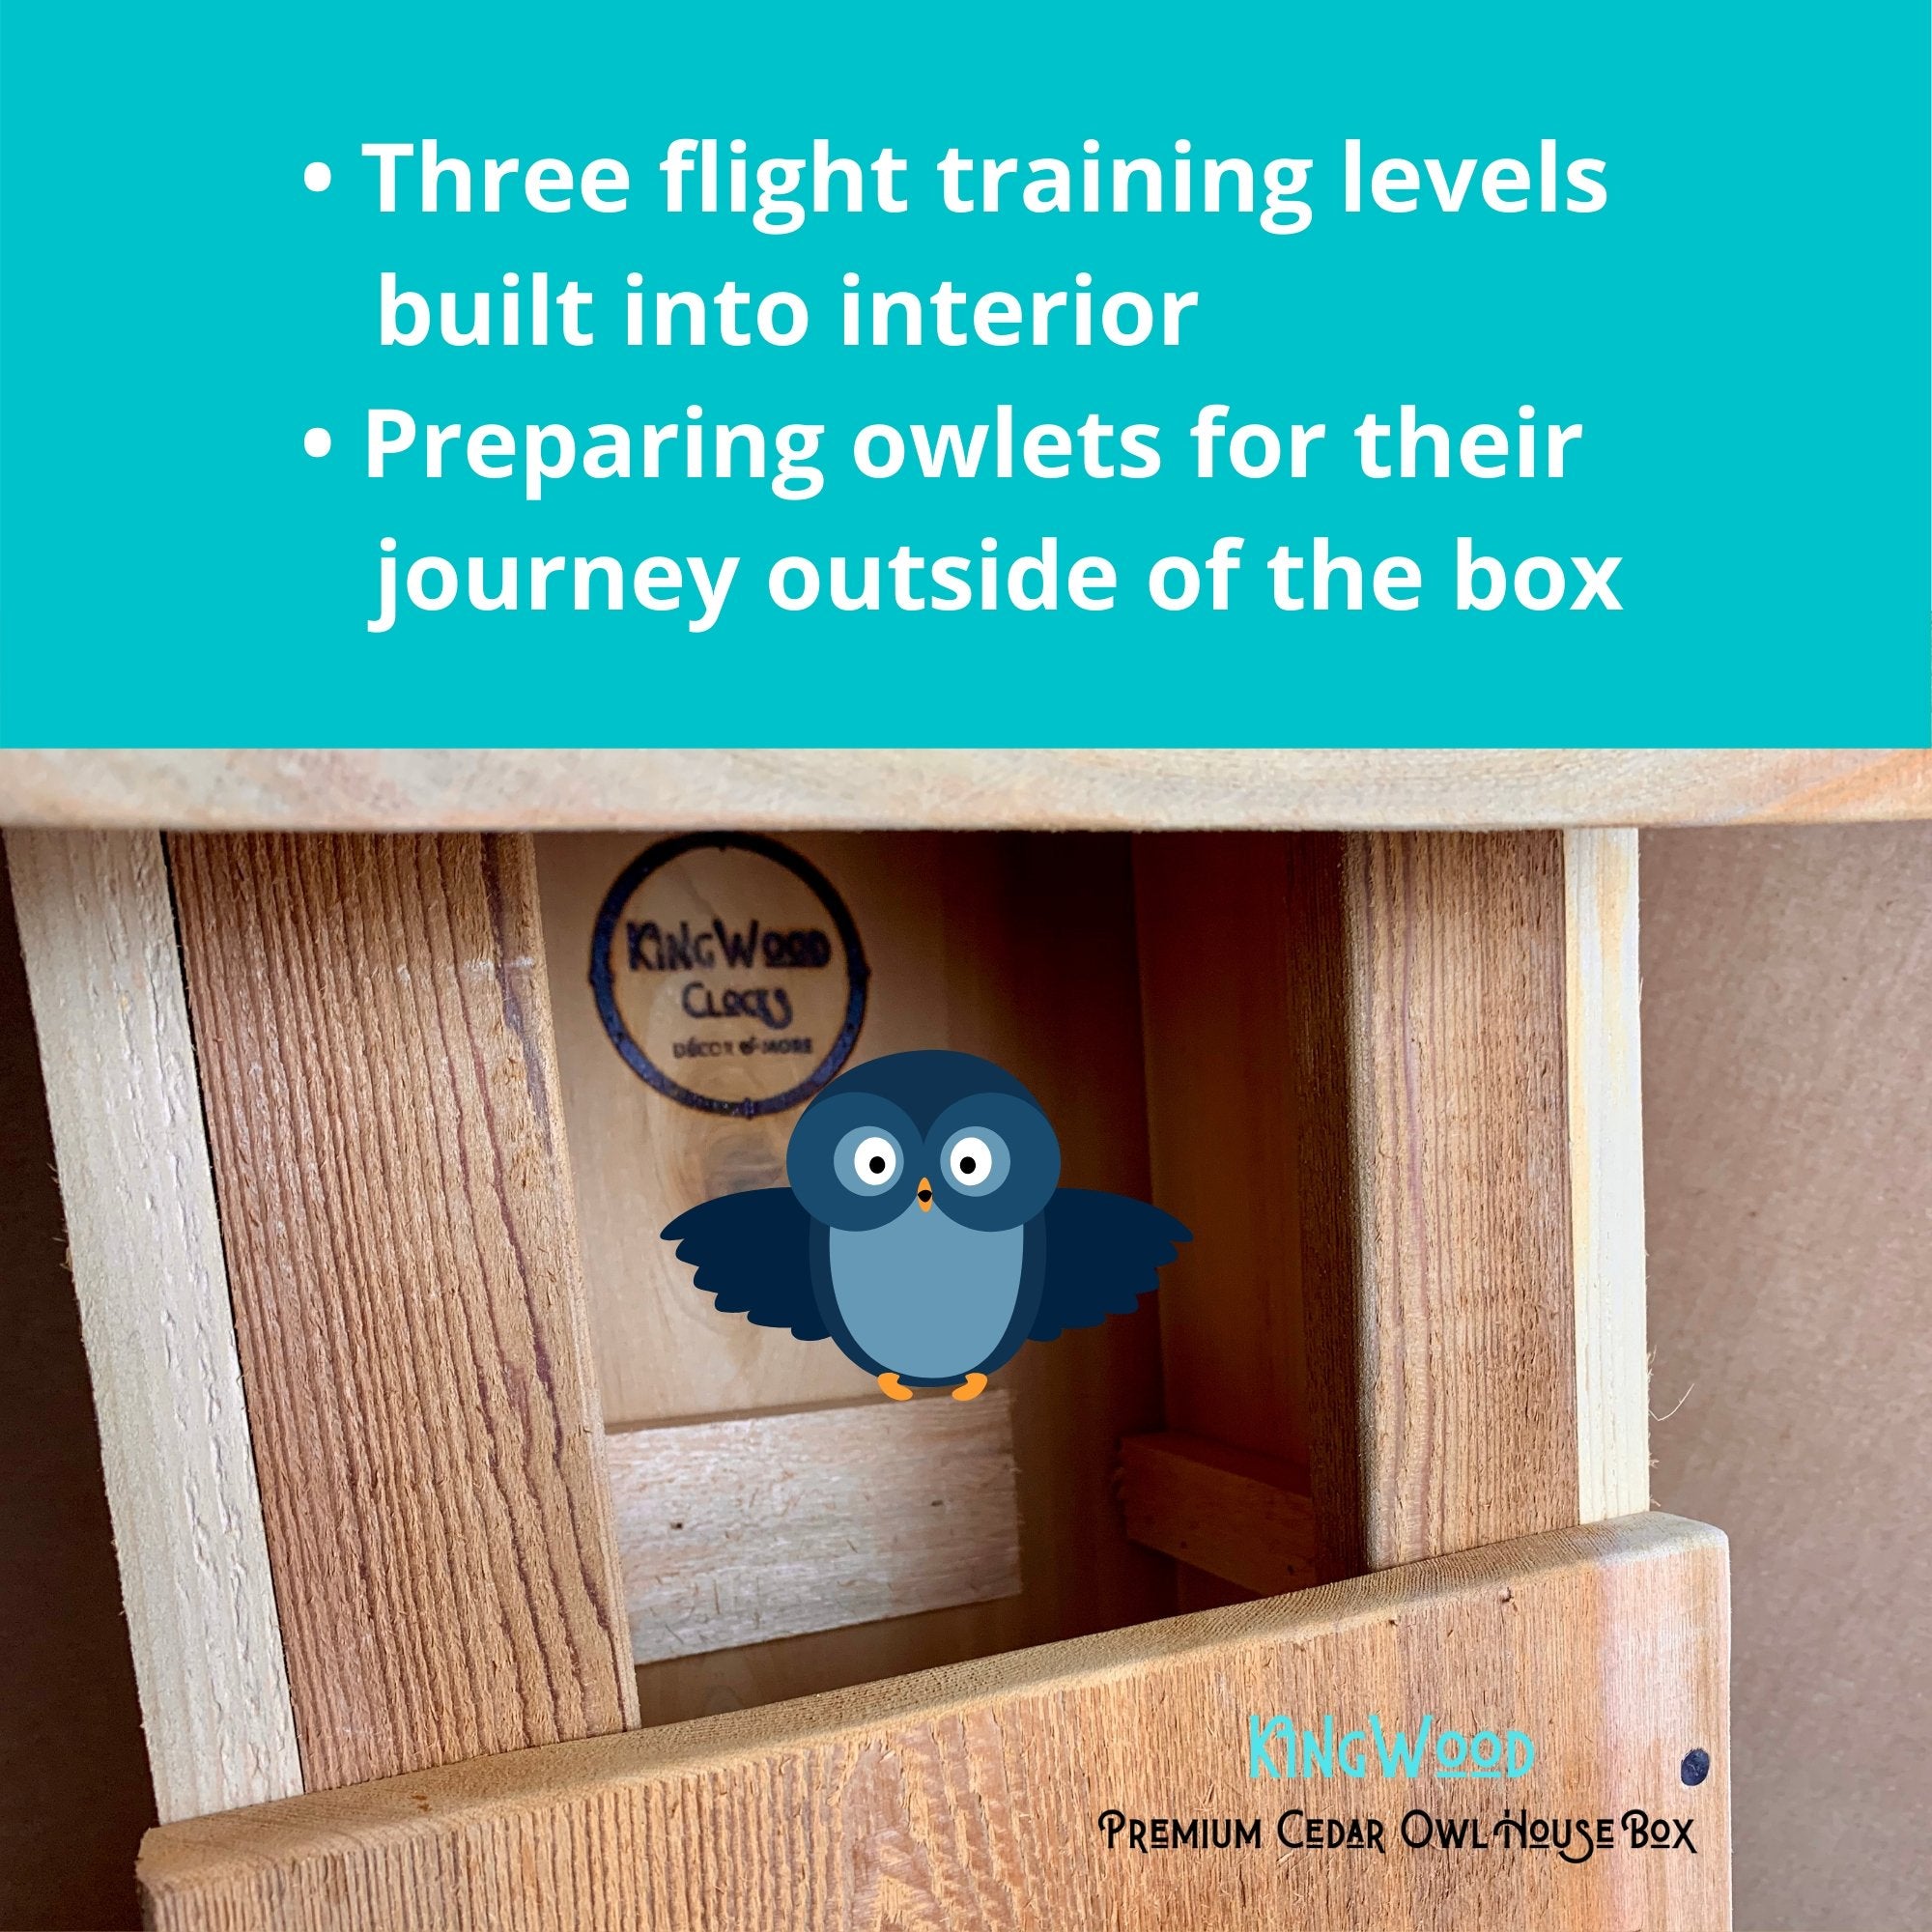 Kingwood Premium Cedar Owl Box Flight train